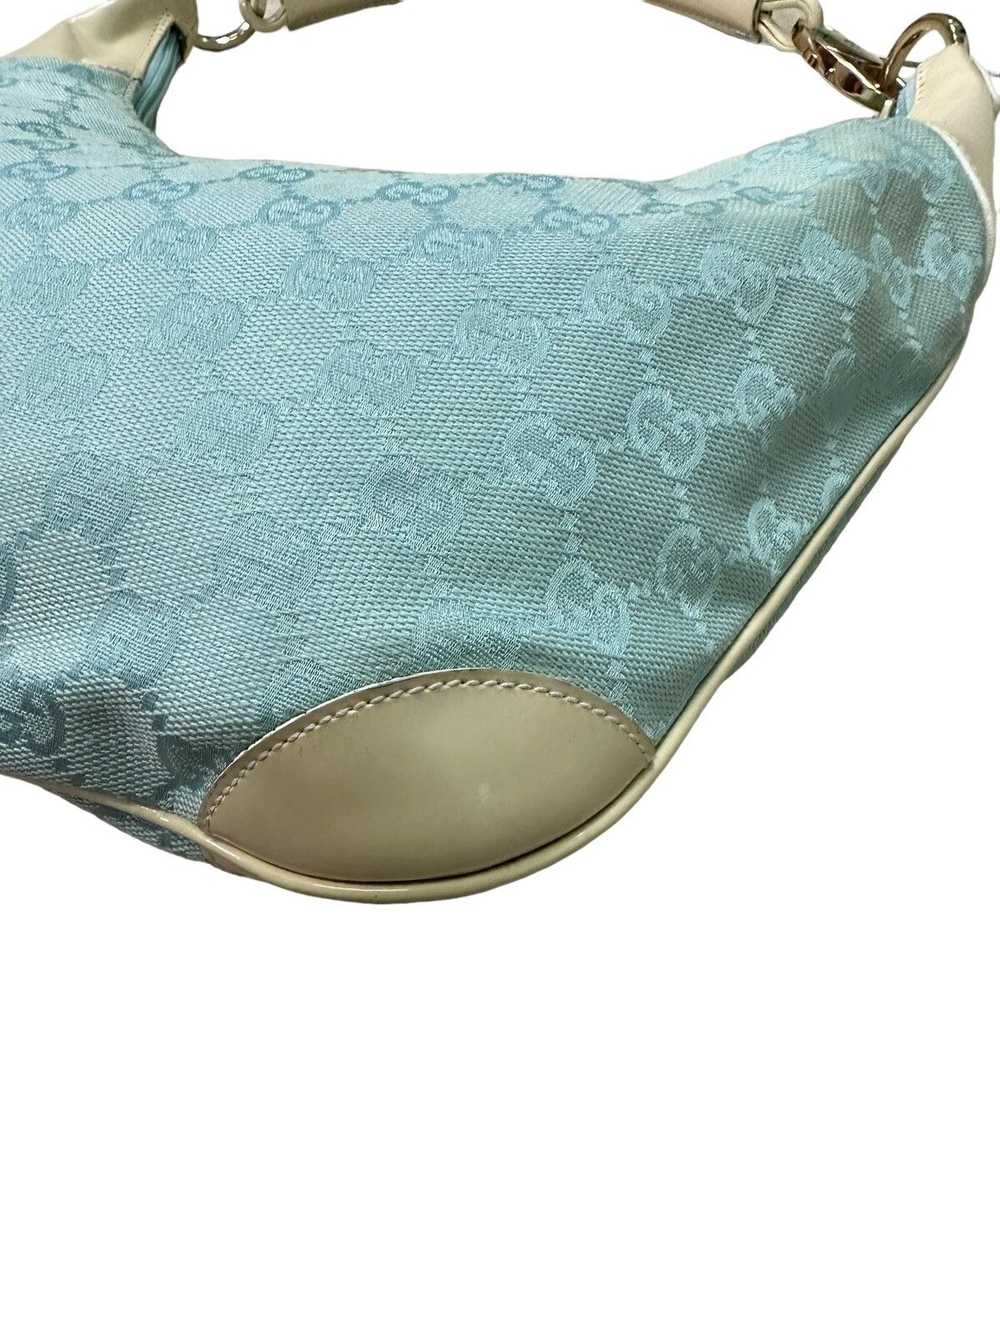 Gucci AUTHENTIC GUCCI MONOGRAM SOFT BLUE HOBO BAG - image 7